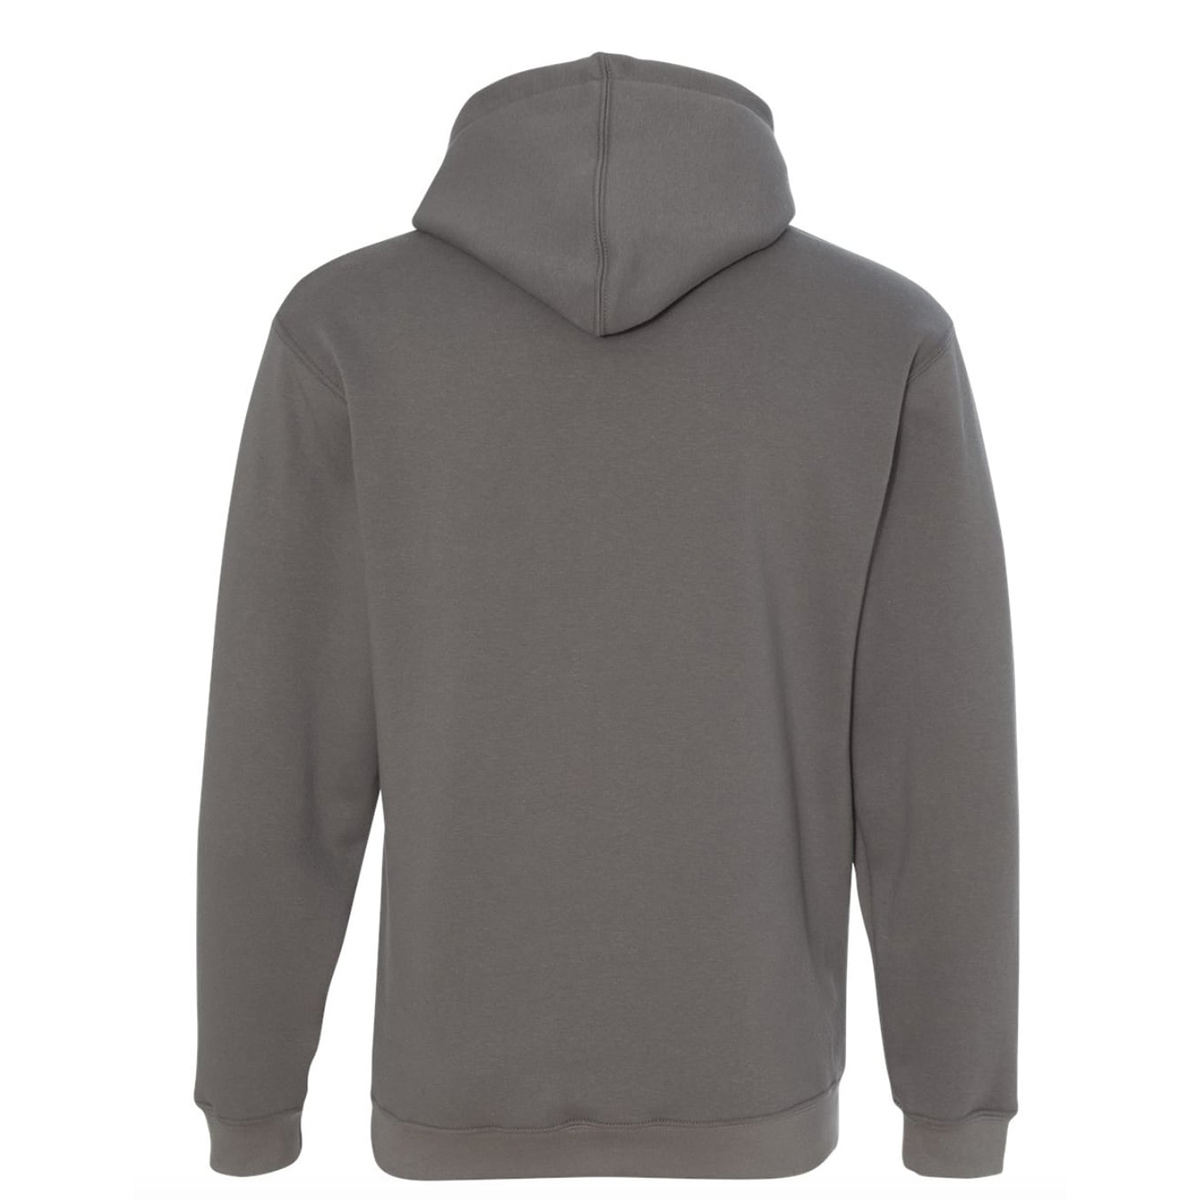 BAYSIDE ベイサイド 9.5 oz USA-Made Hooded Sweatshirt (品番960)